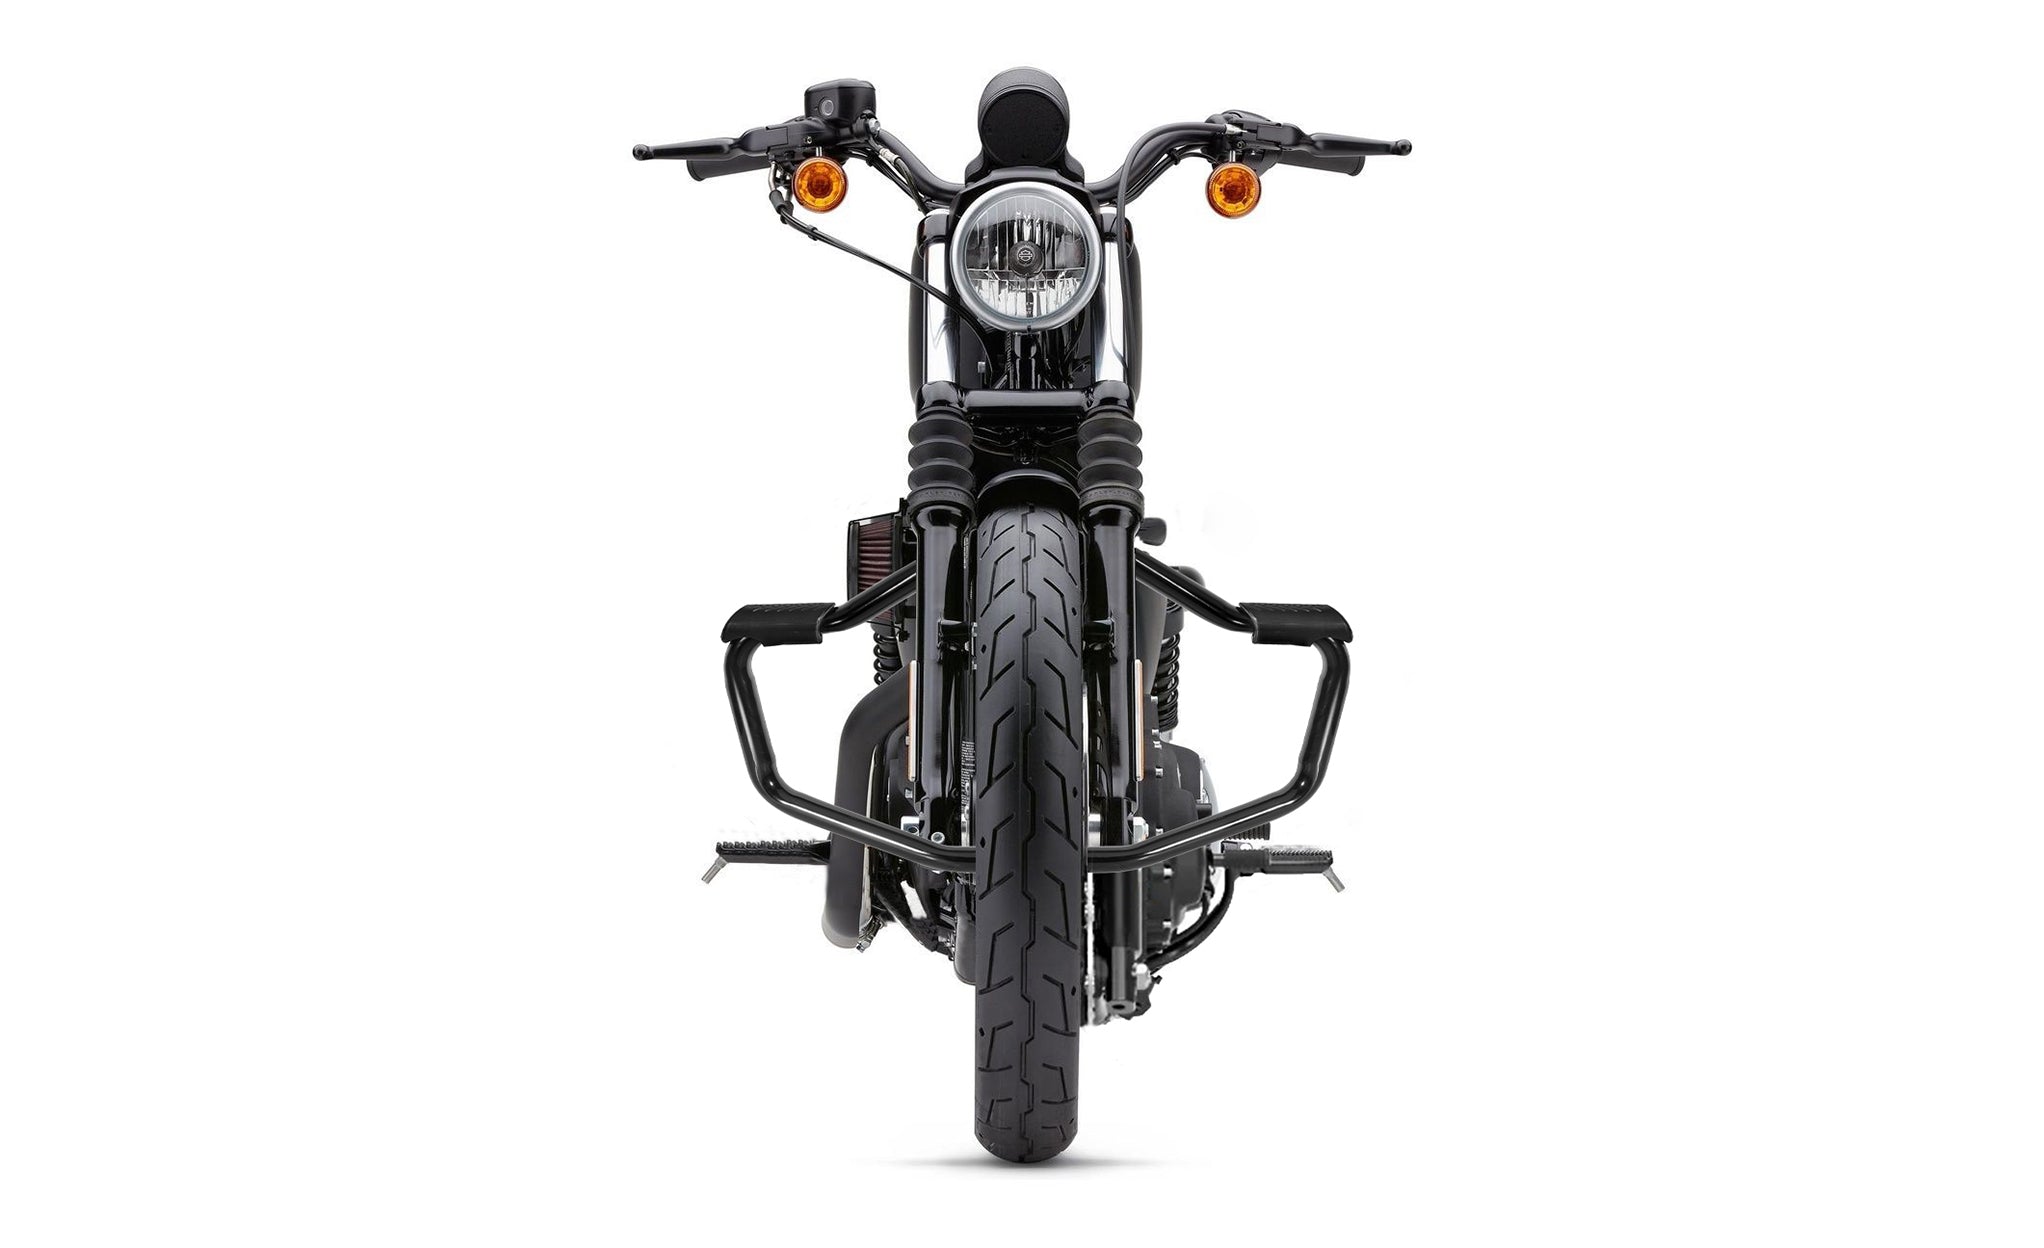 Viking Iron Born Motorcycle Crash Bar/Engine Guard for Harley Sportster 1200 Custom XL1200C Gloss Black Bag on Bike View @expand